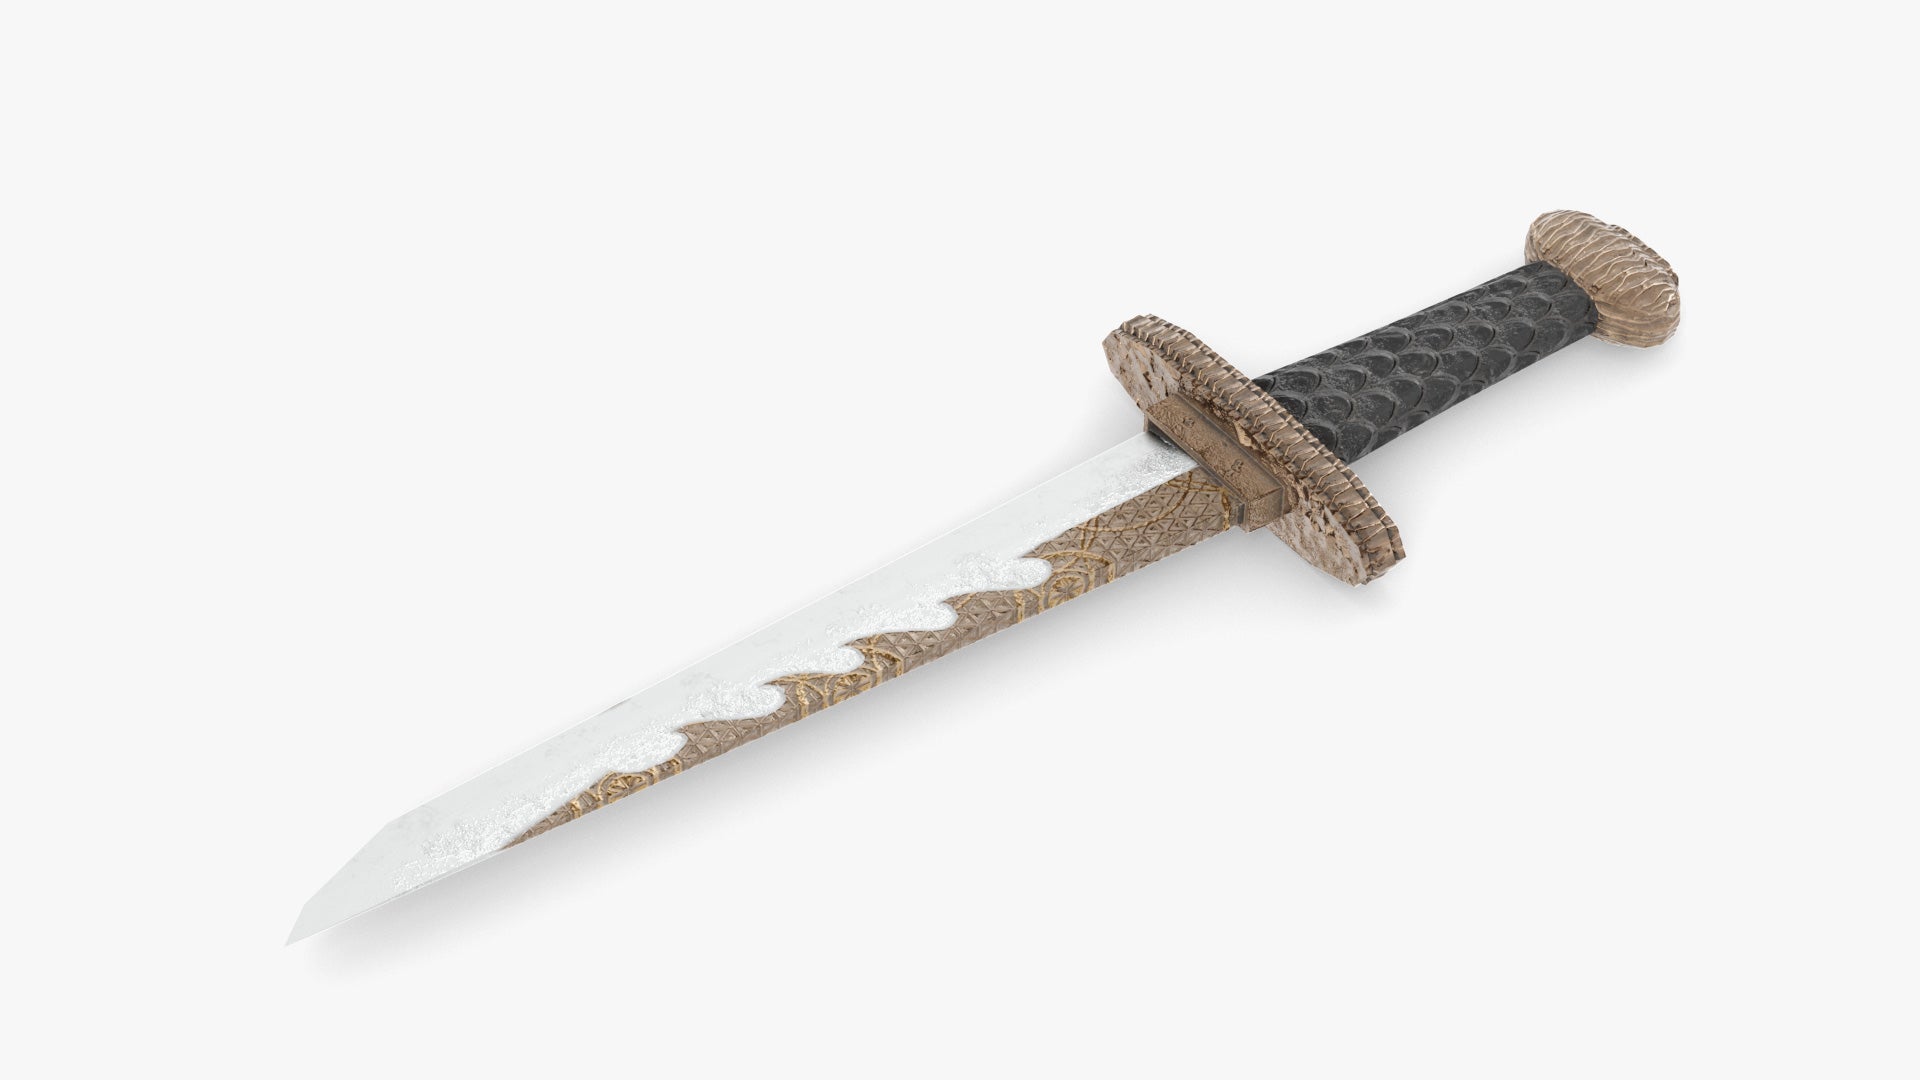 ornamental dagger afgan pesh kabz medieval fantasy 3d model blender obj